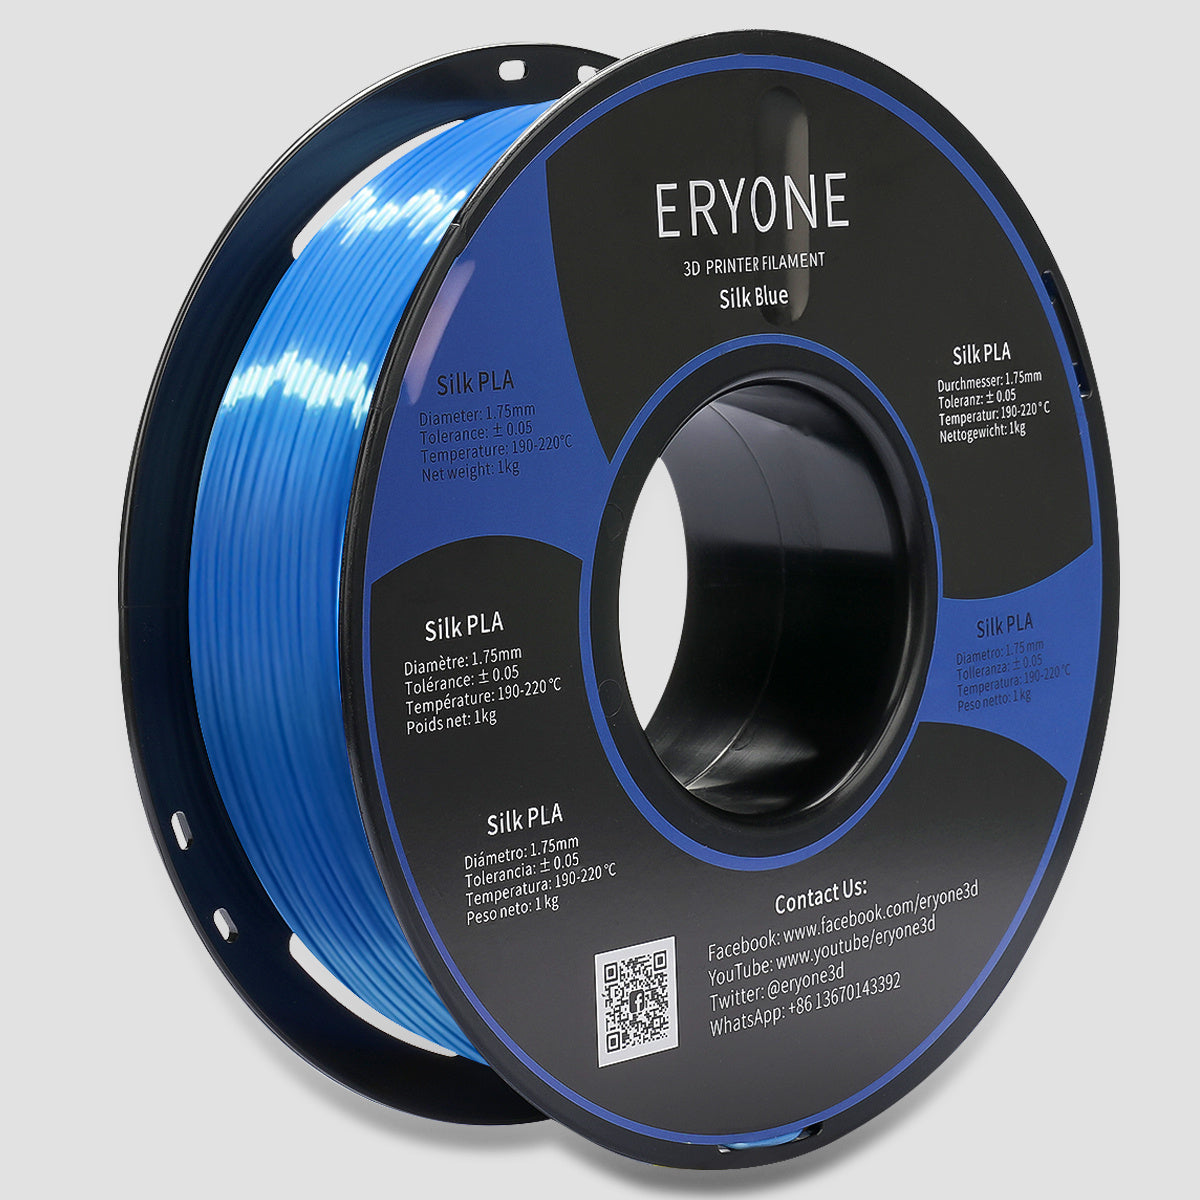 ERYONE Silk PLA Filament 1.75mm, Silky Shiny 3D Printing Material for 3D Printer and 3D Pen, 1kg 1 Spool, 1.75mm